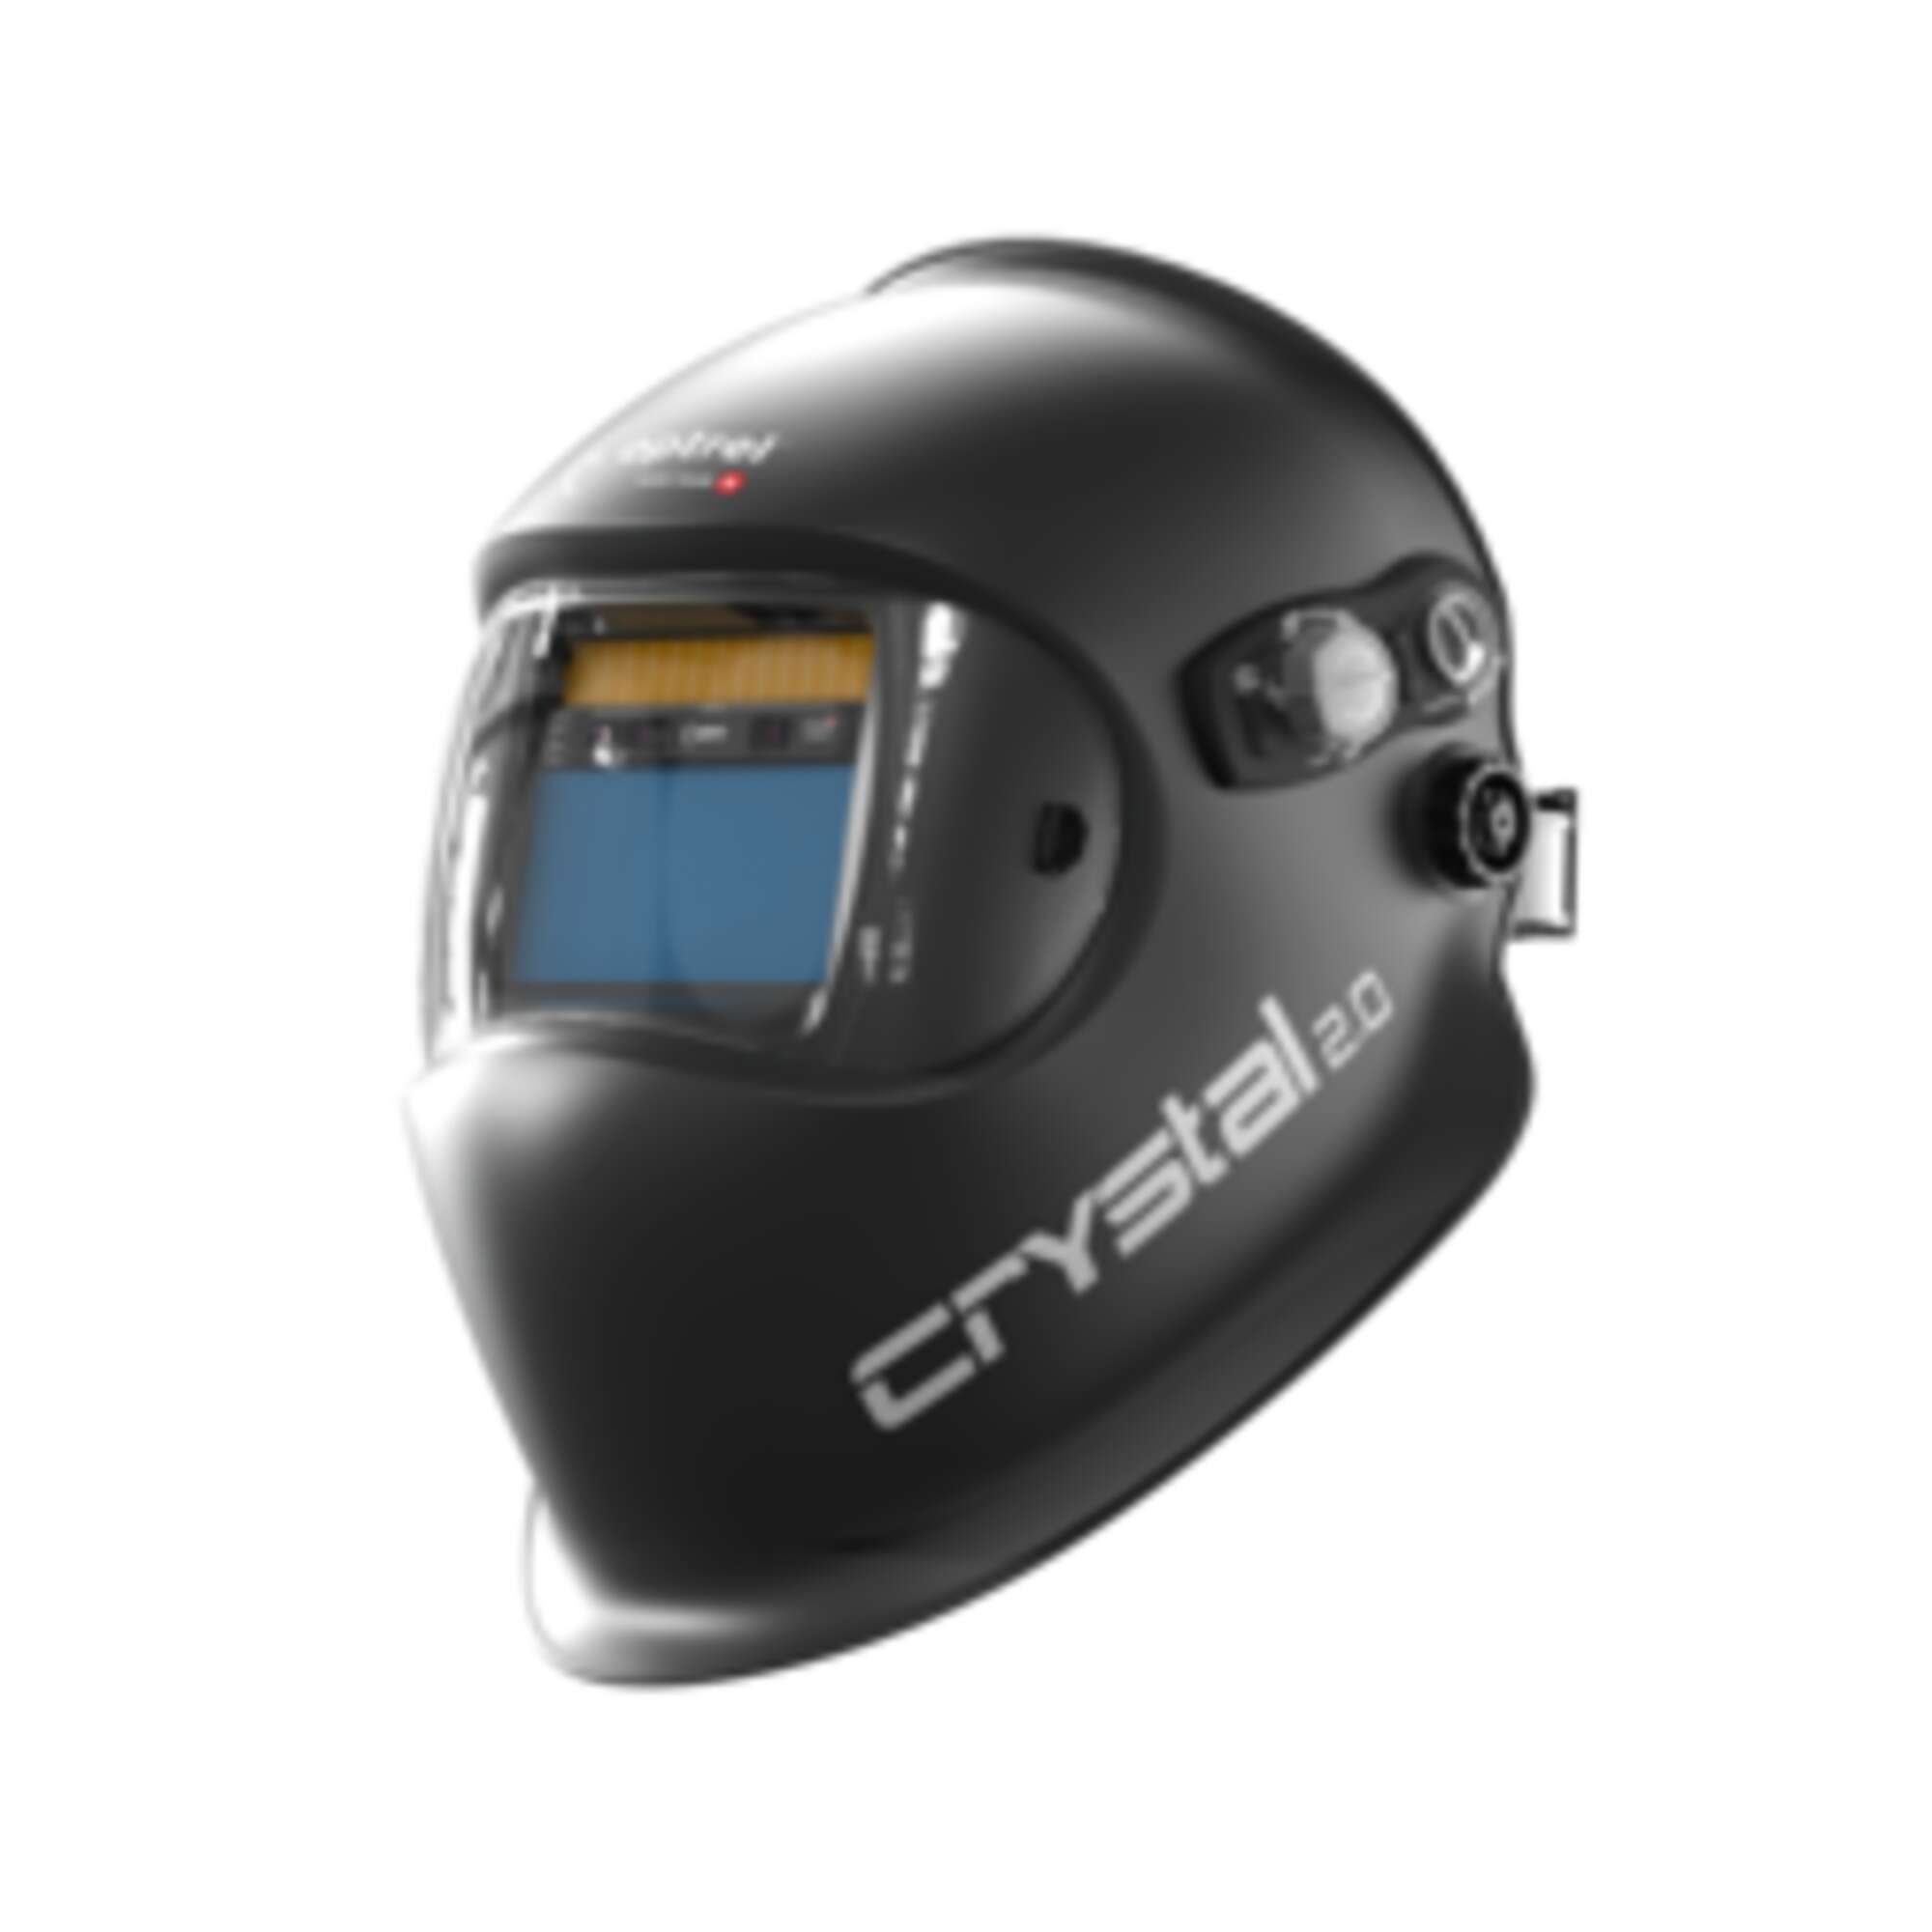 Optrel Crystal 2 0 Welding Helmet in Black Auto Darkening Switch Time 1 10000 sec